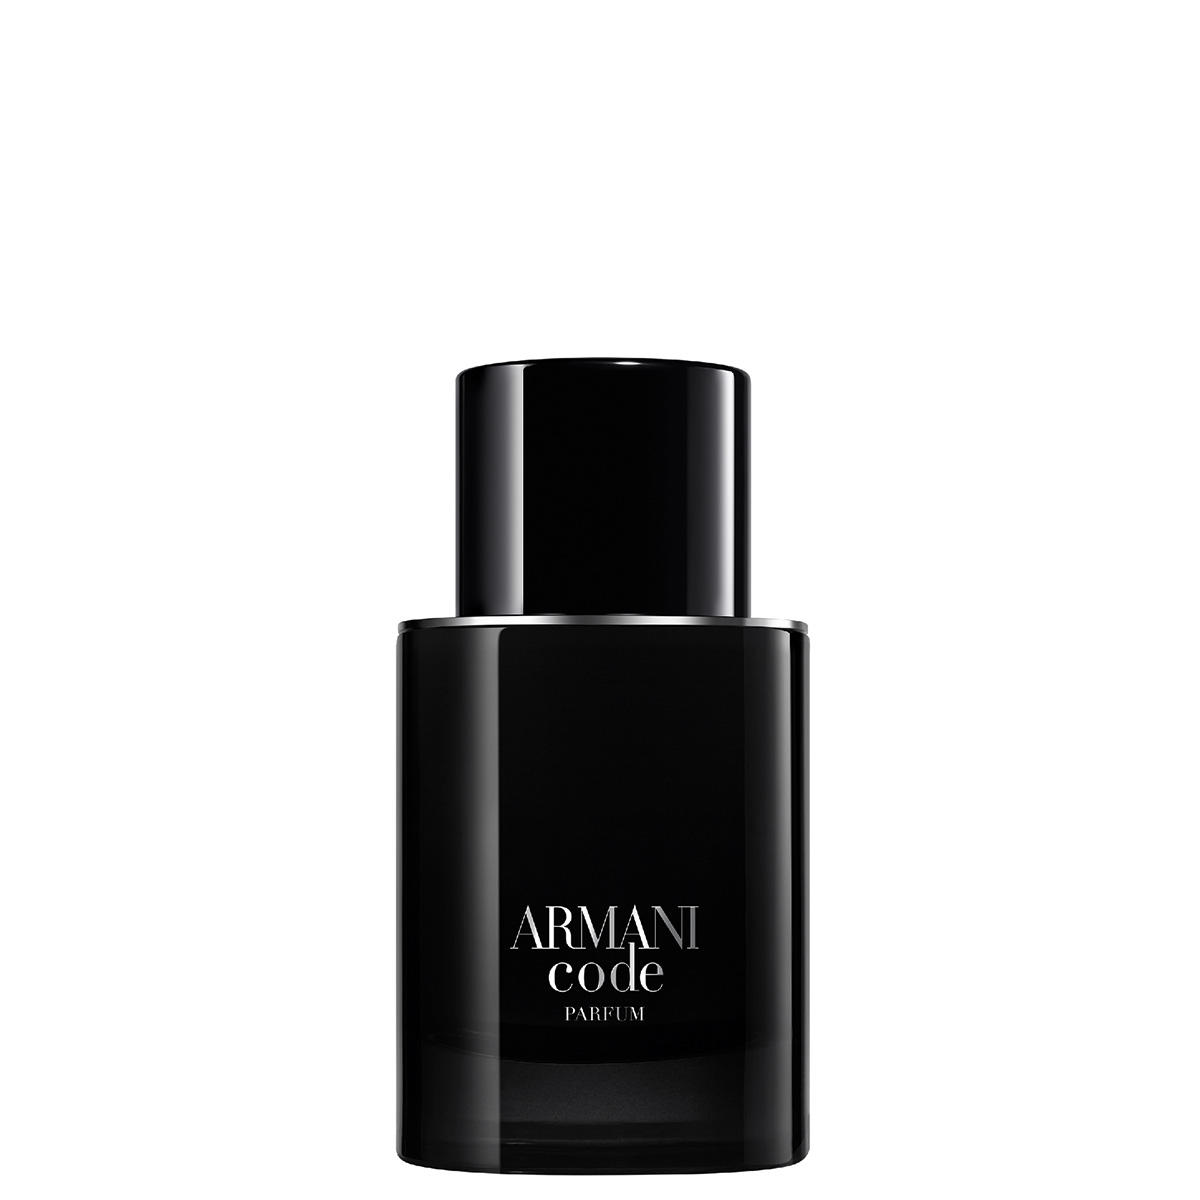 Giorgio Armani ARMANI Code Home Parfum 50 ml - 1